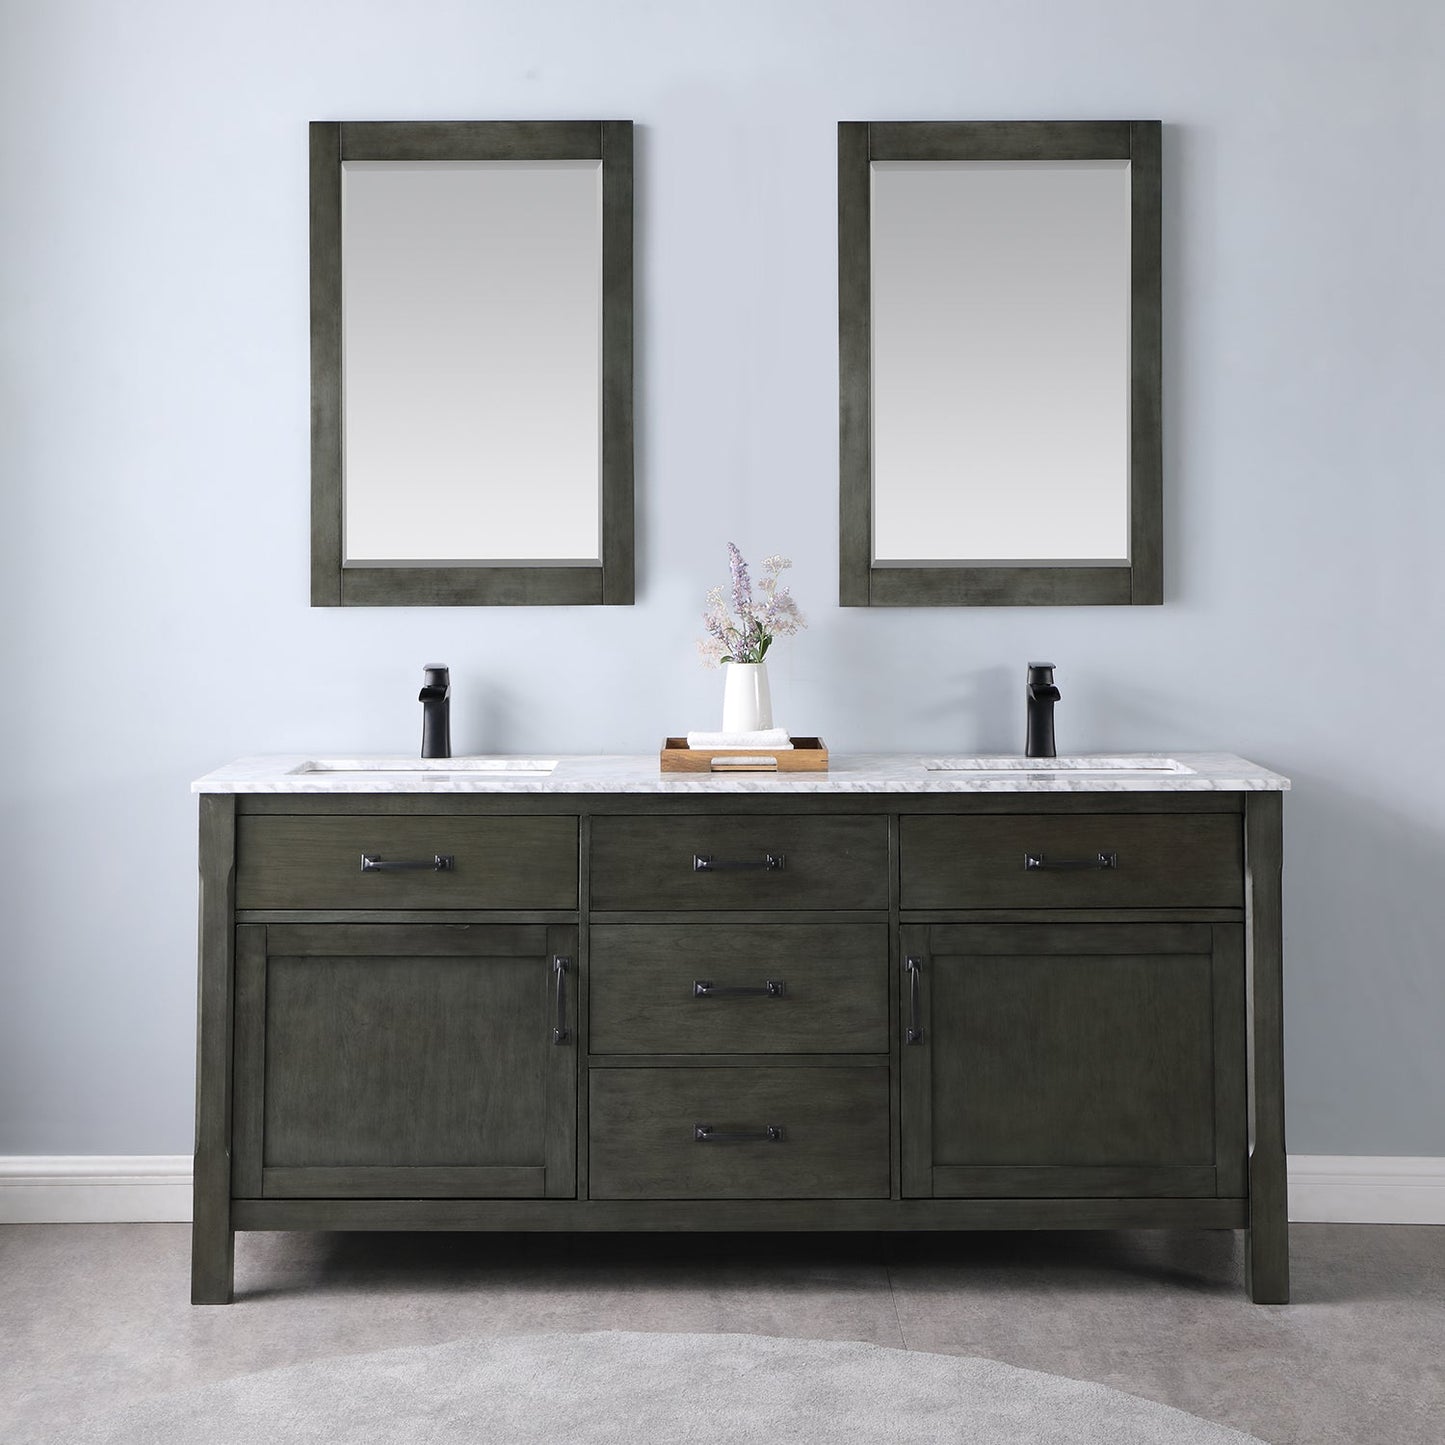 Maribella 72" Double Bathroom Vanity Set in Rust Black and Carrara White Marble Countertop with Mirror